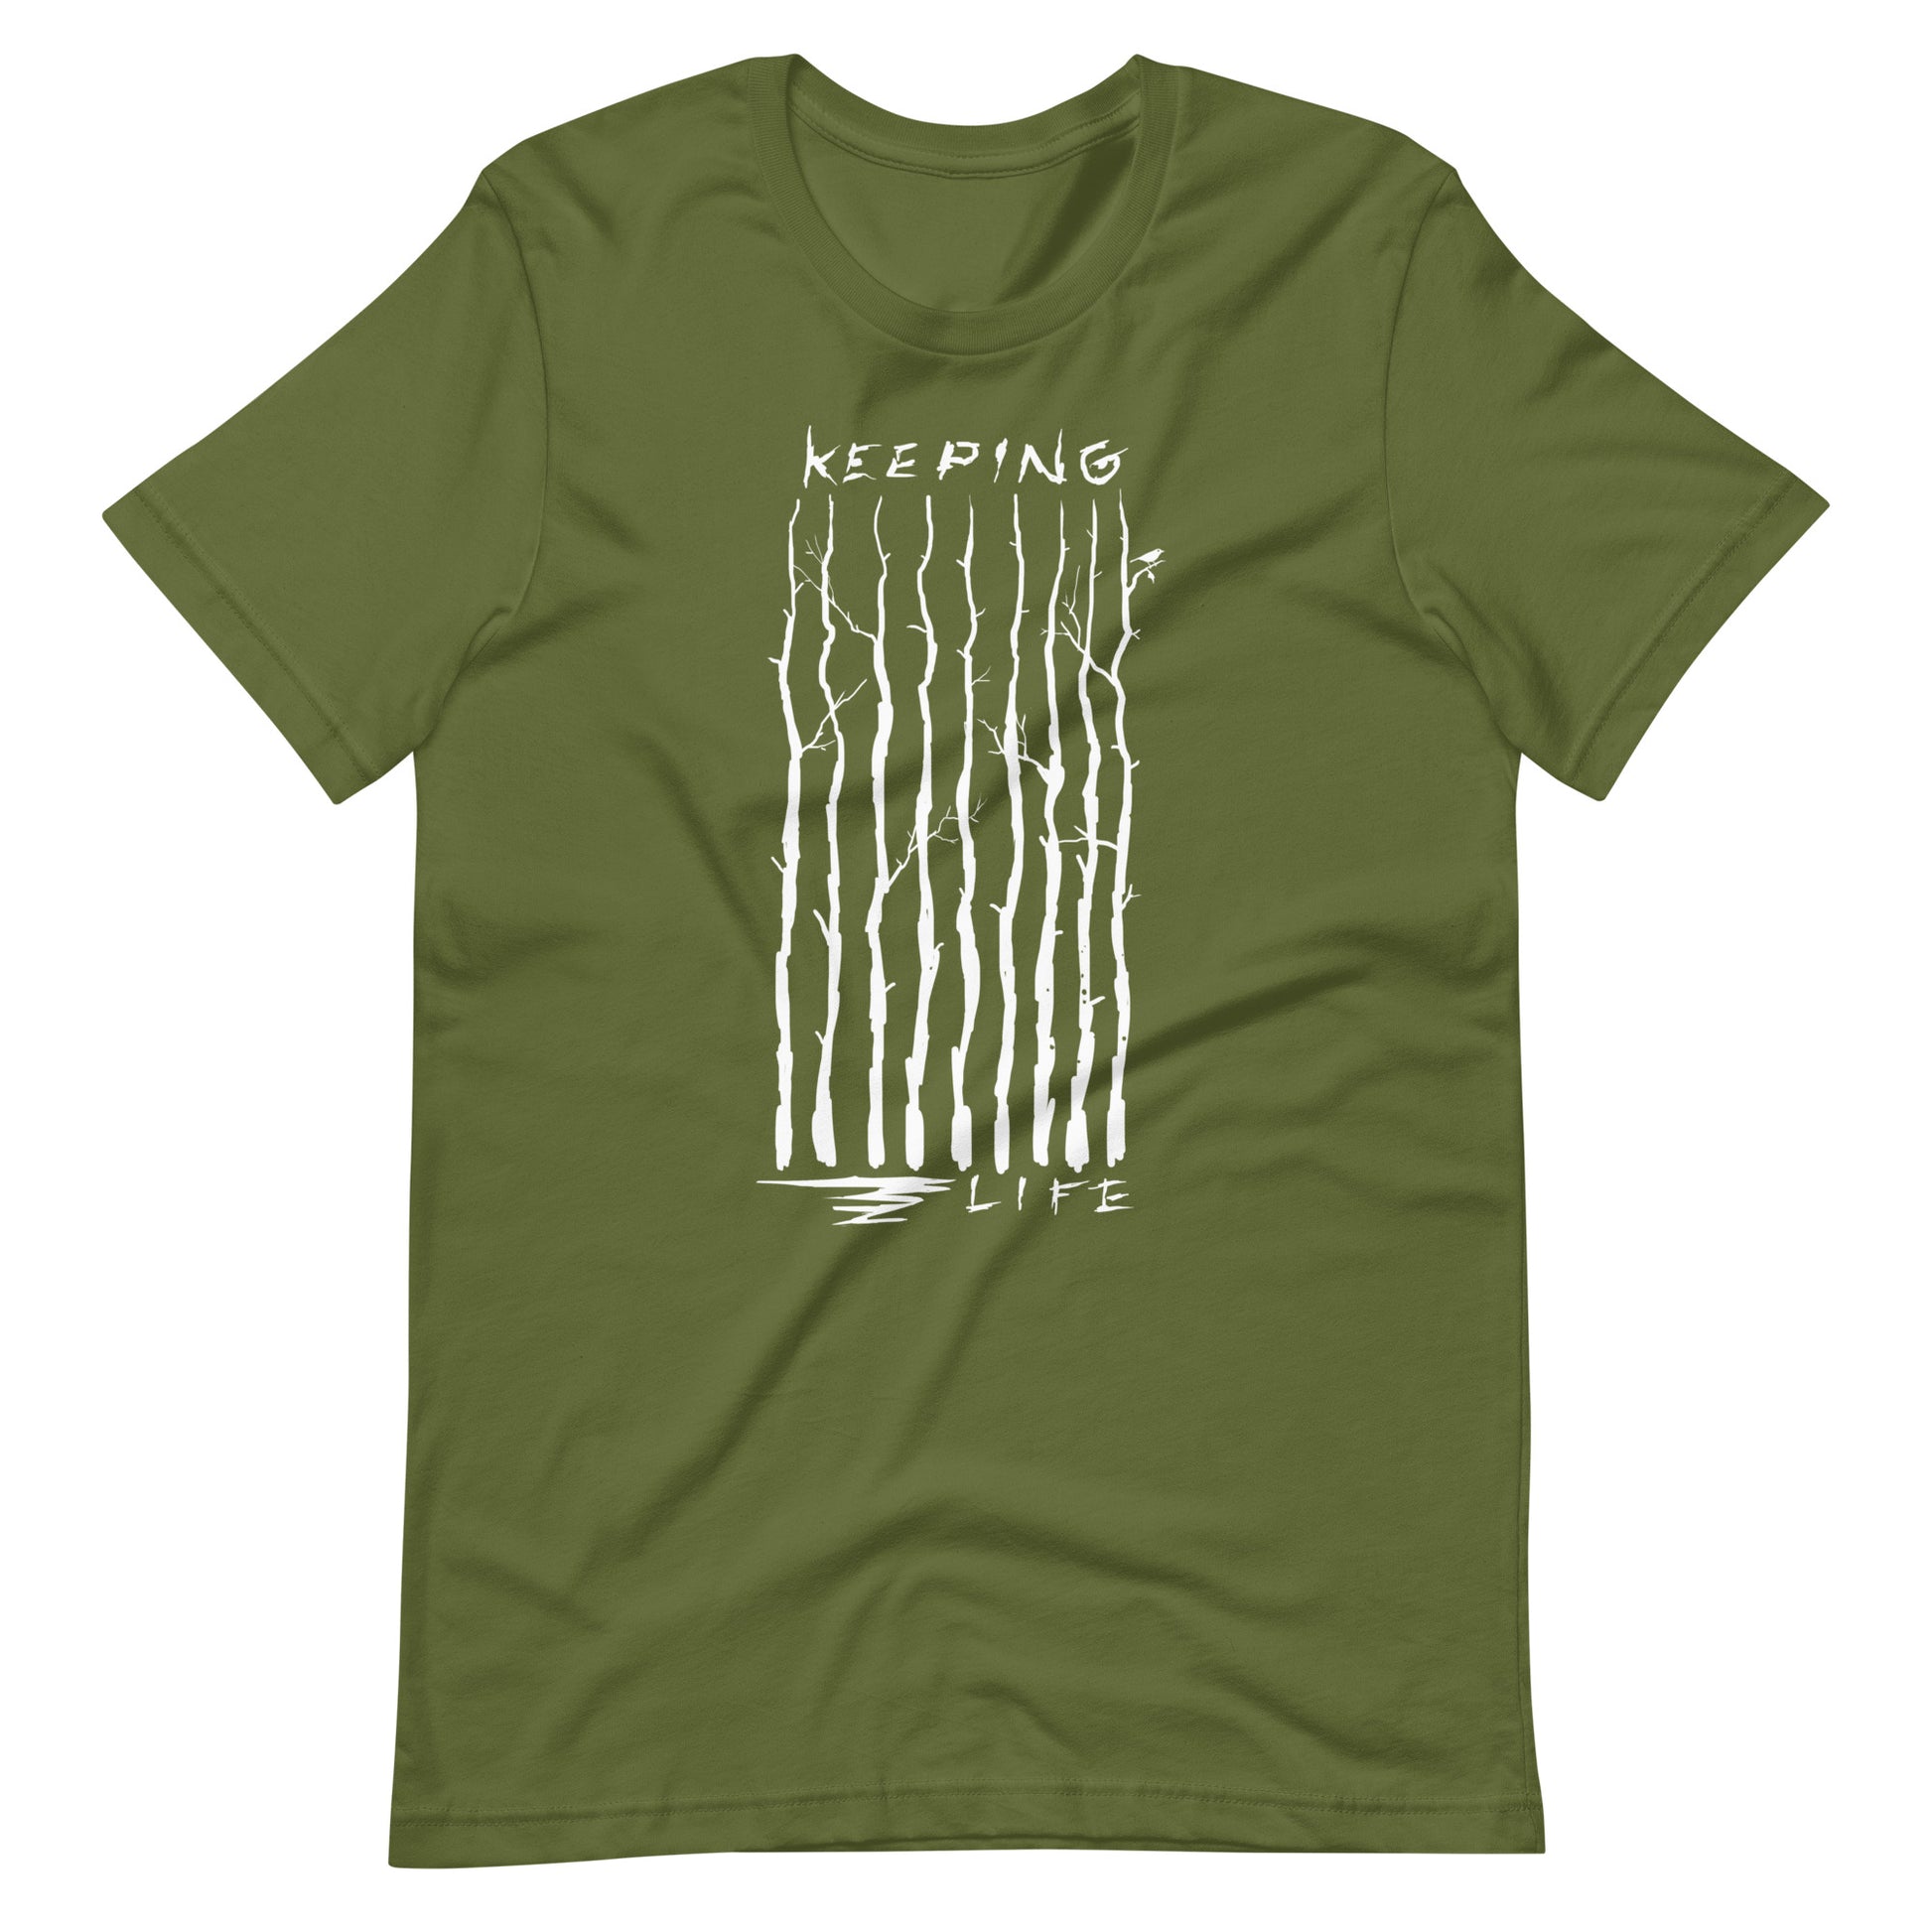 Keeping Lift - Men's t-shirt - Olive Front